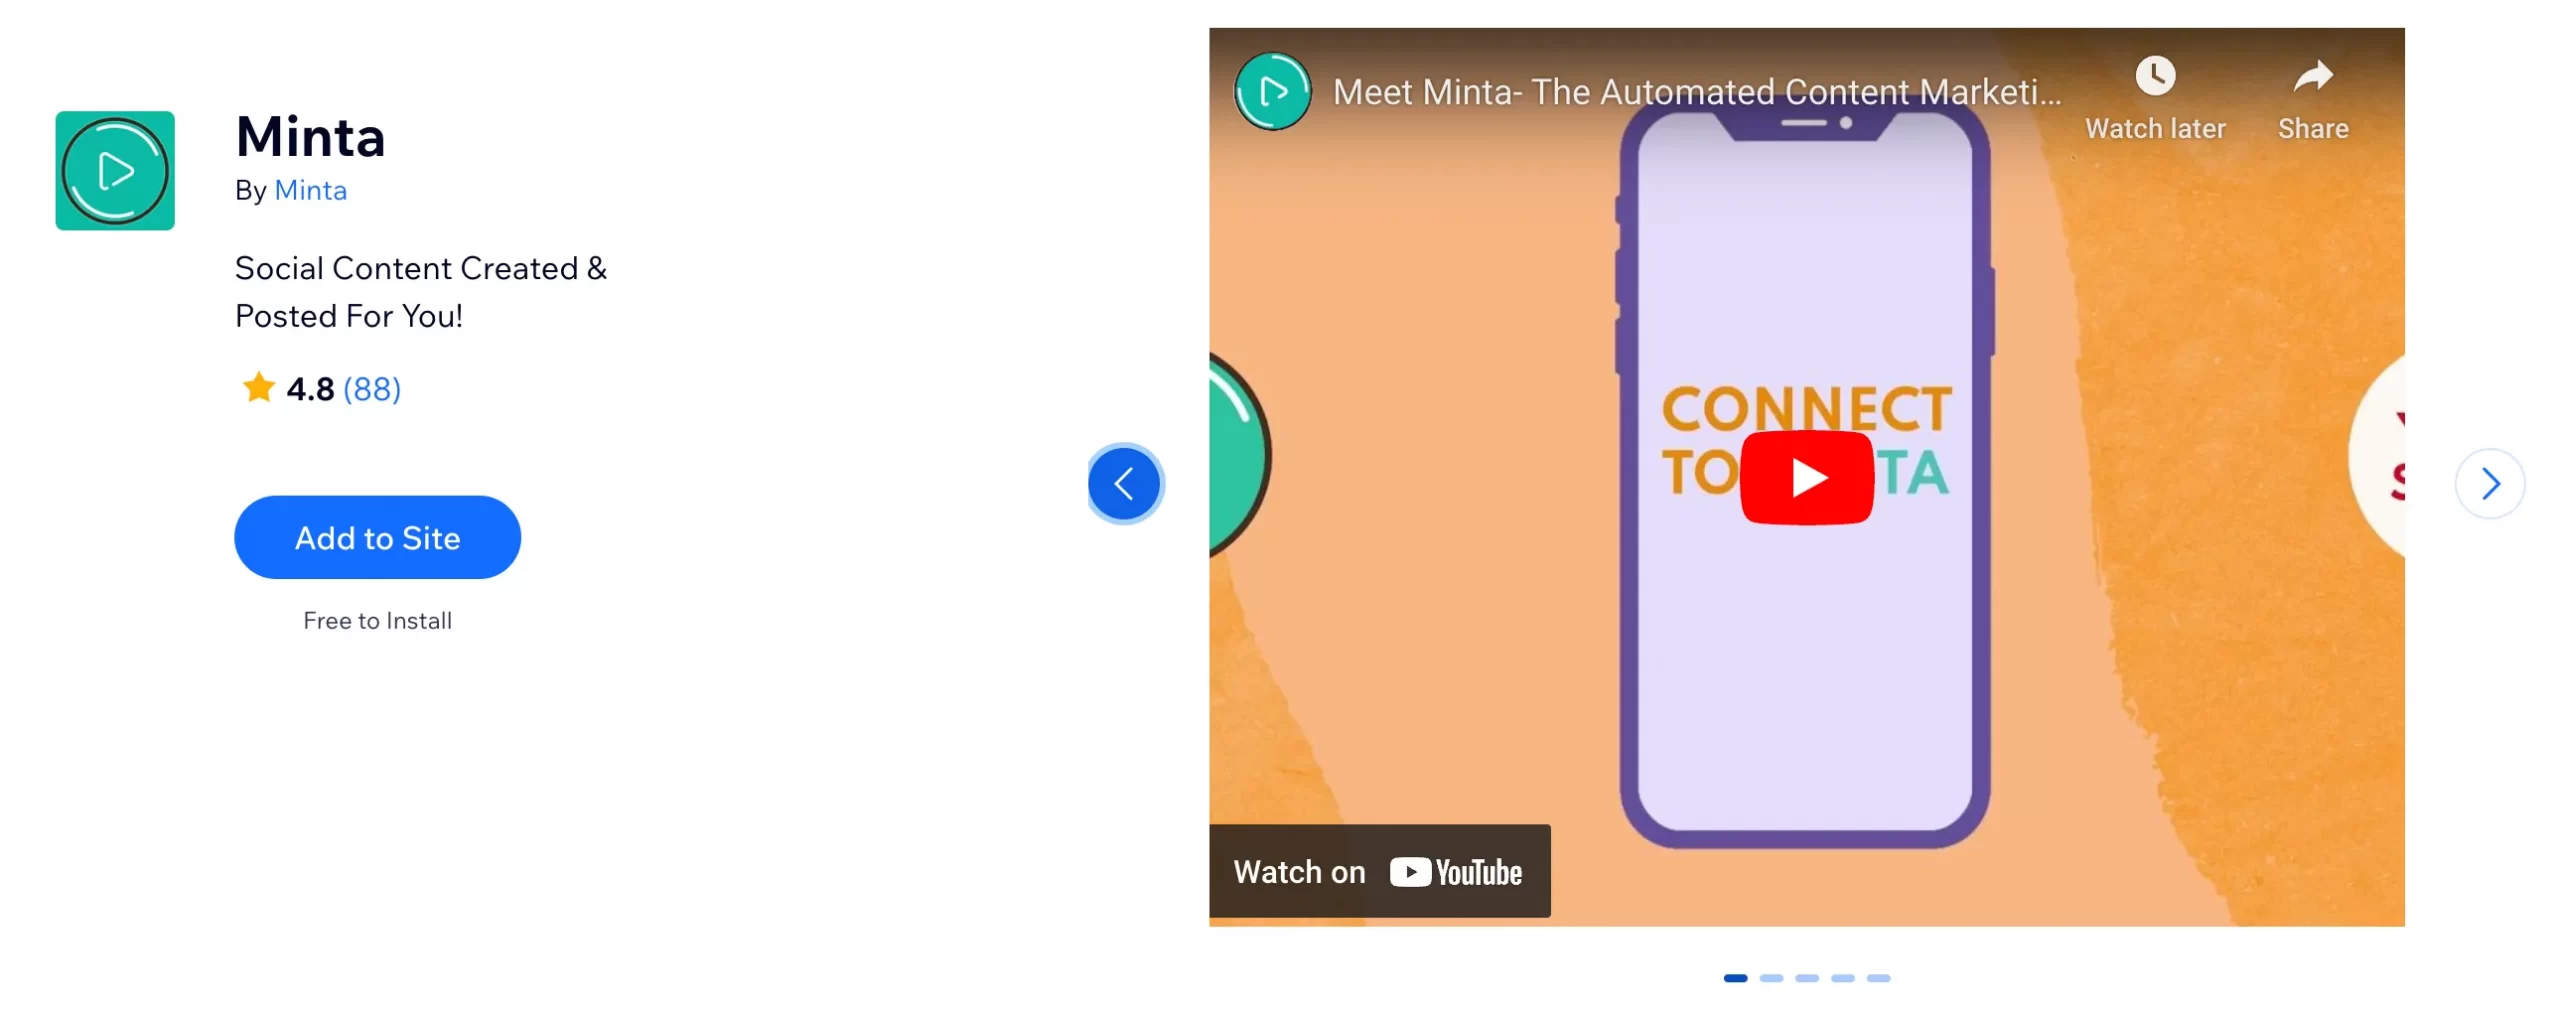 Minta best wix apps for social